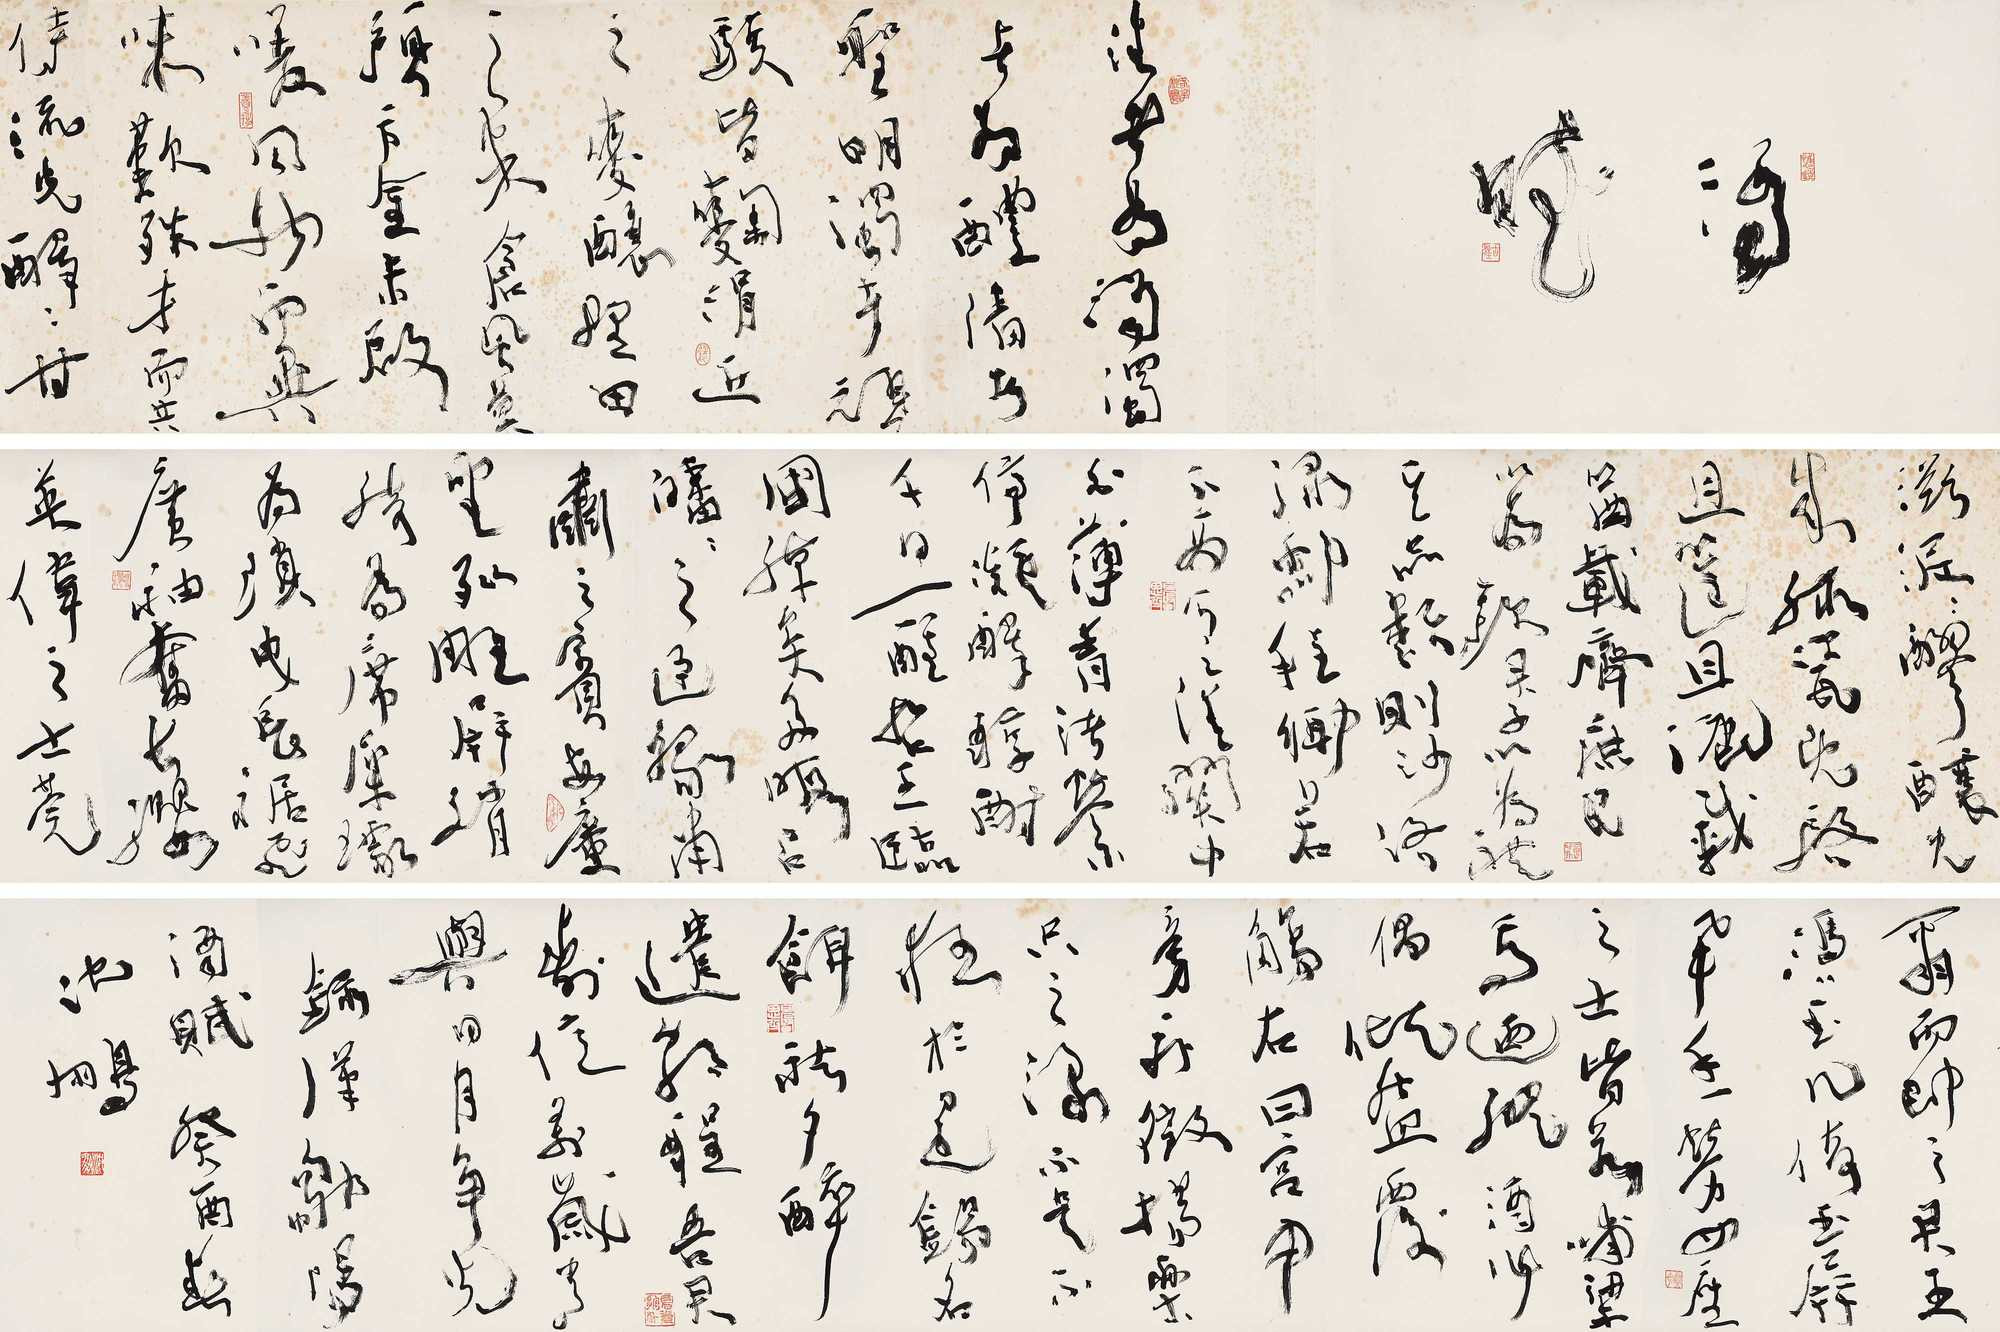 Cursive Script Calligraphy